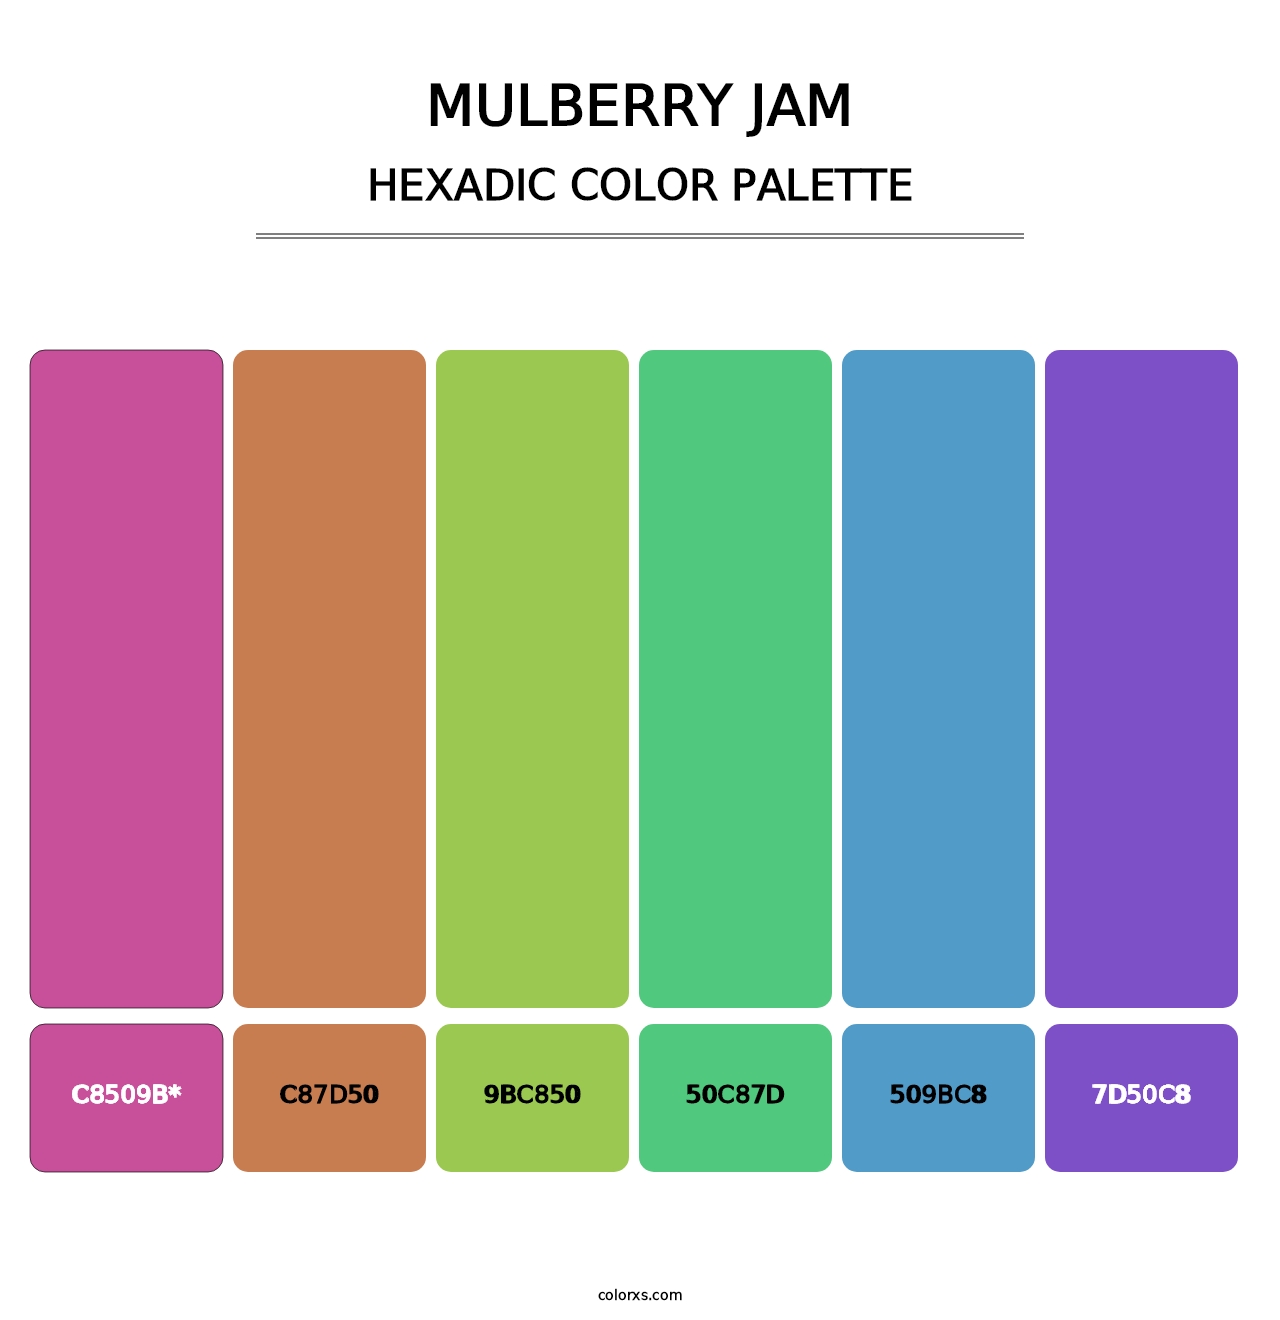 Mulberry Jam - Hexadic Color Palette